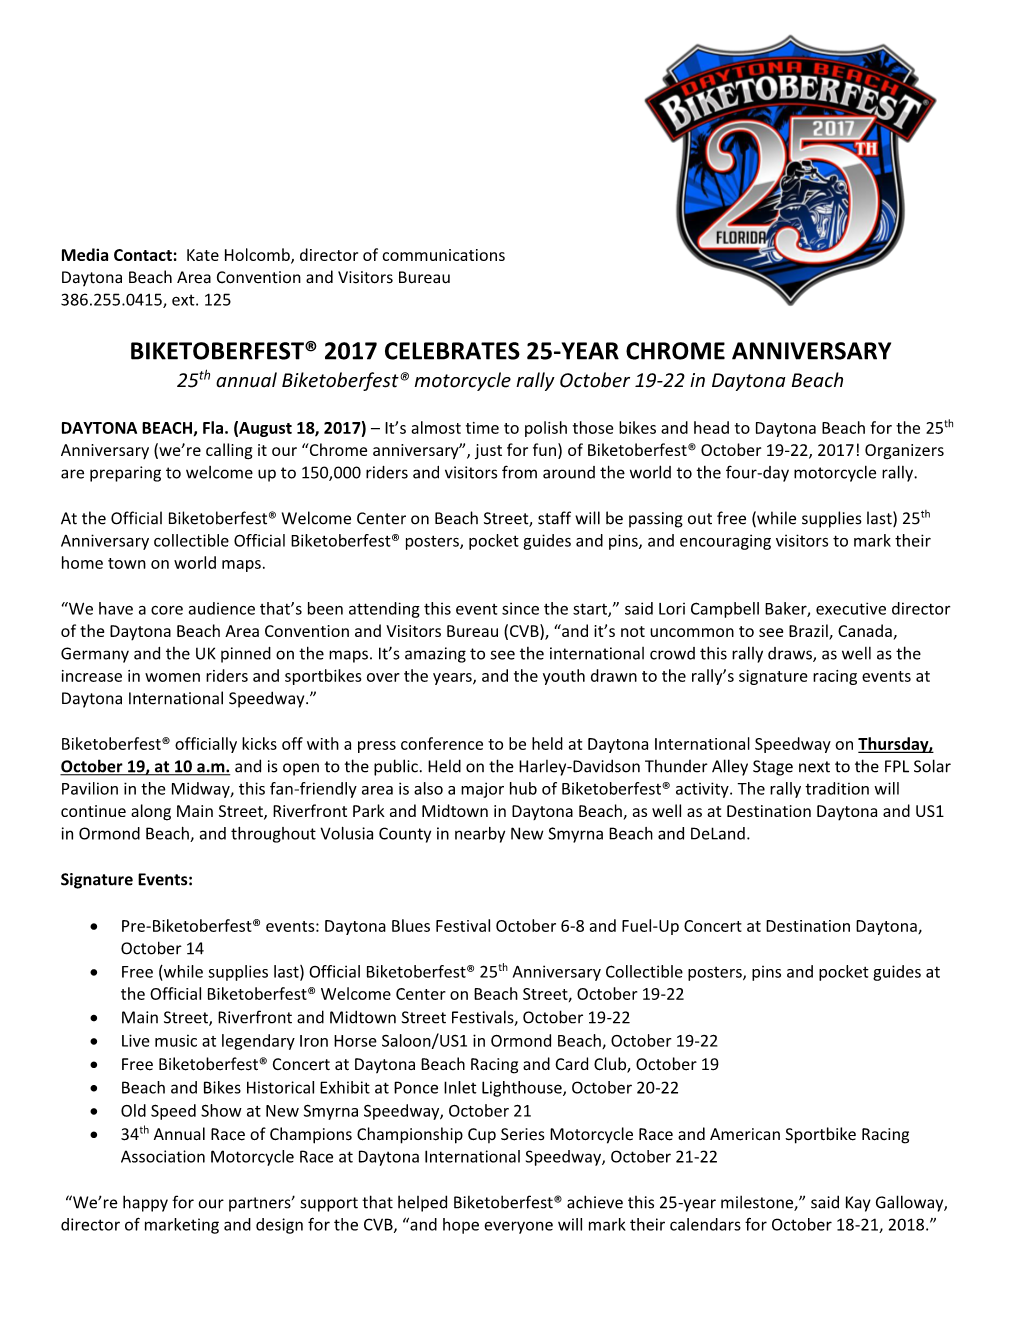 BIKETOBERFEST® 2017 CELEBRATES 25-YEAR CHROME ANNIVERSARY 25Th Annual Biketoberfest® Motorcycle Rally October 19-22 in Daytona Beach